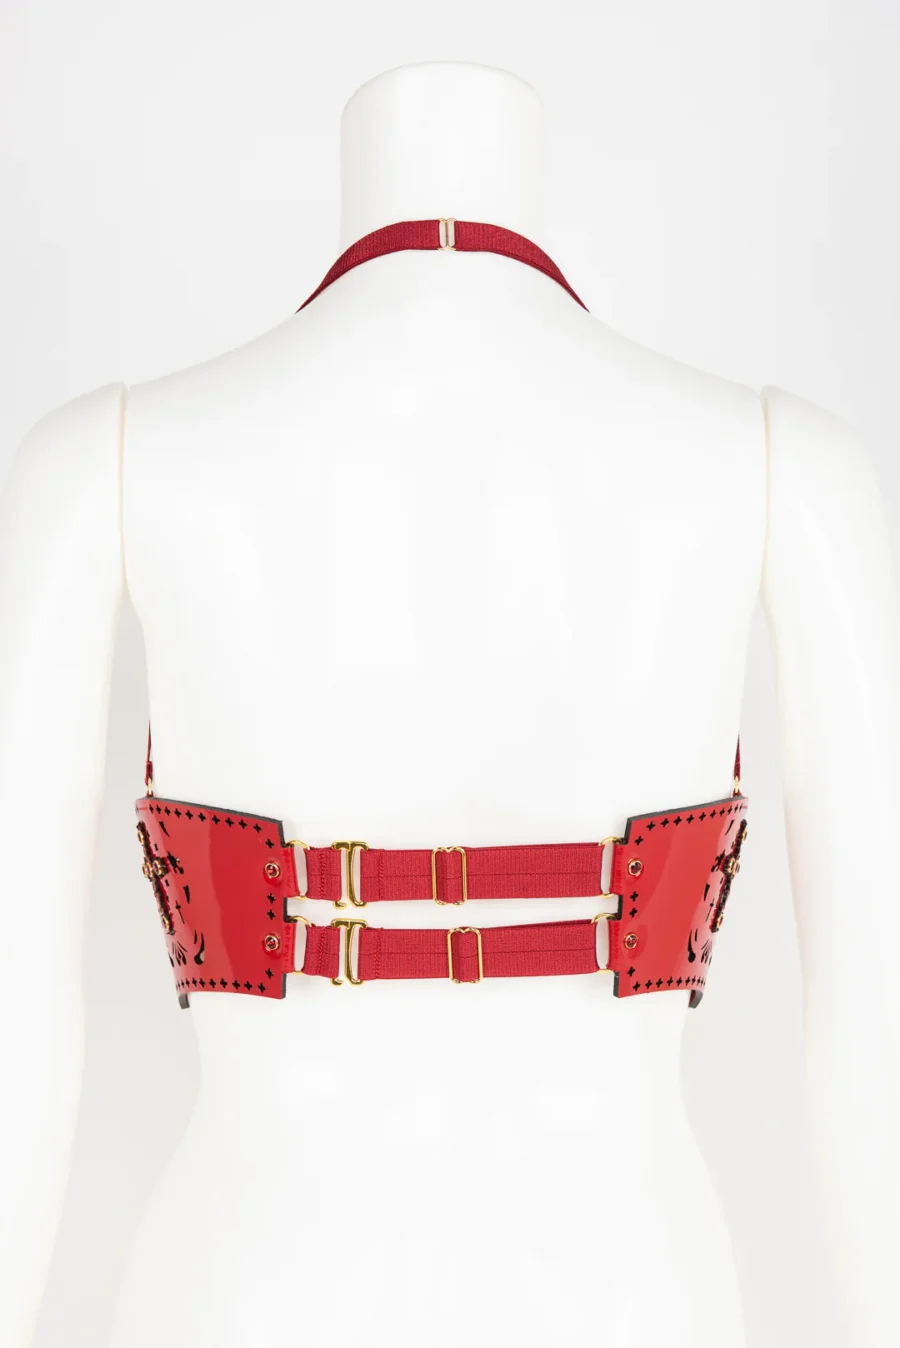 Fraulein Kink Rosso Bianco Nero Underbust Harness 4